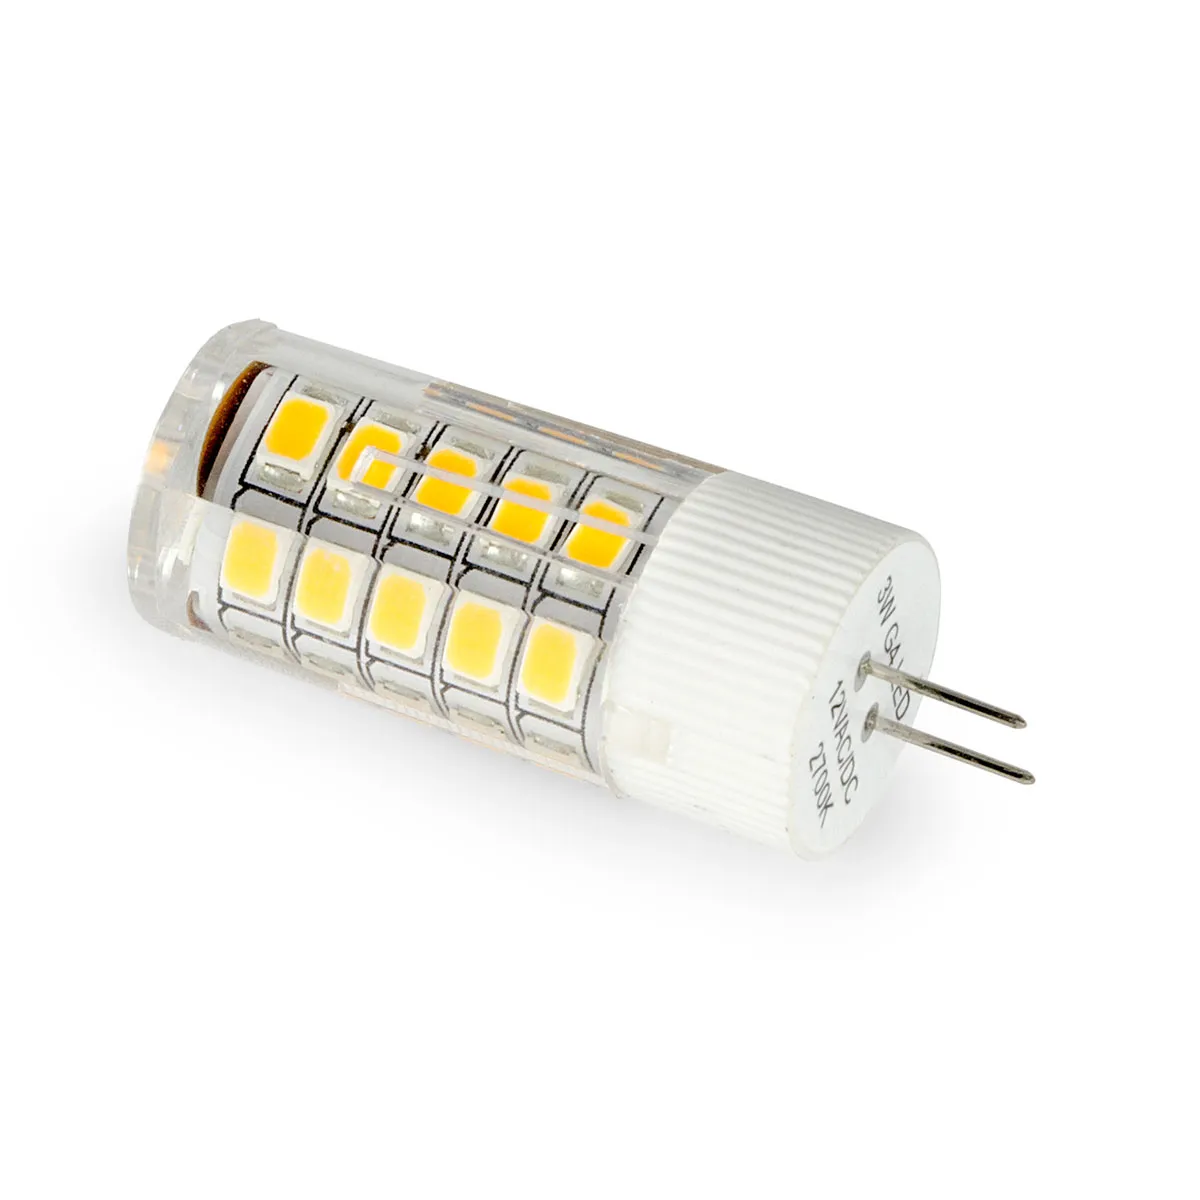 Afgang intelligens picnic 3-Watt LED Bulb | Replacement Path and Area LED Bulb